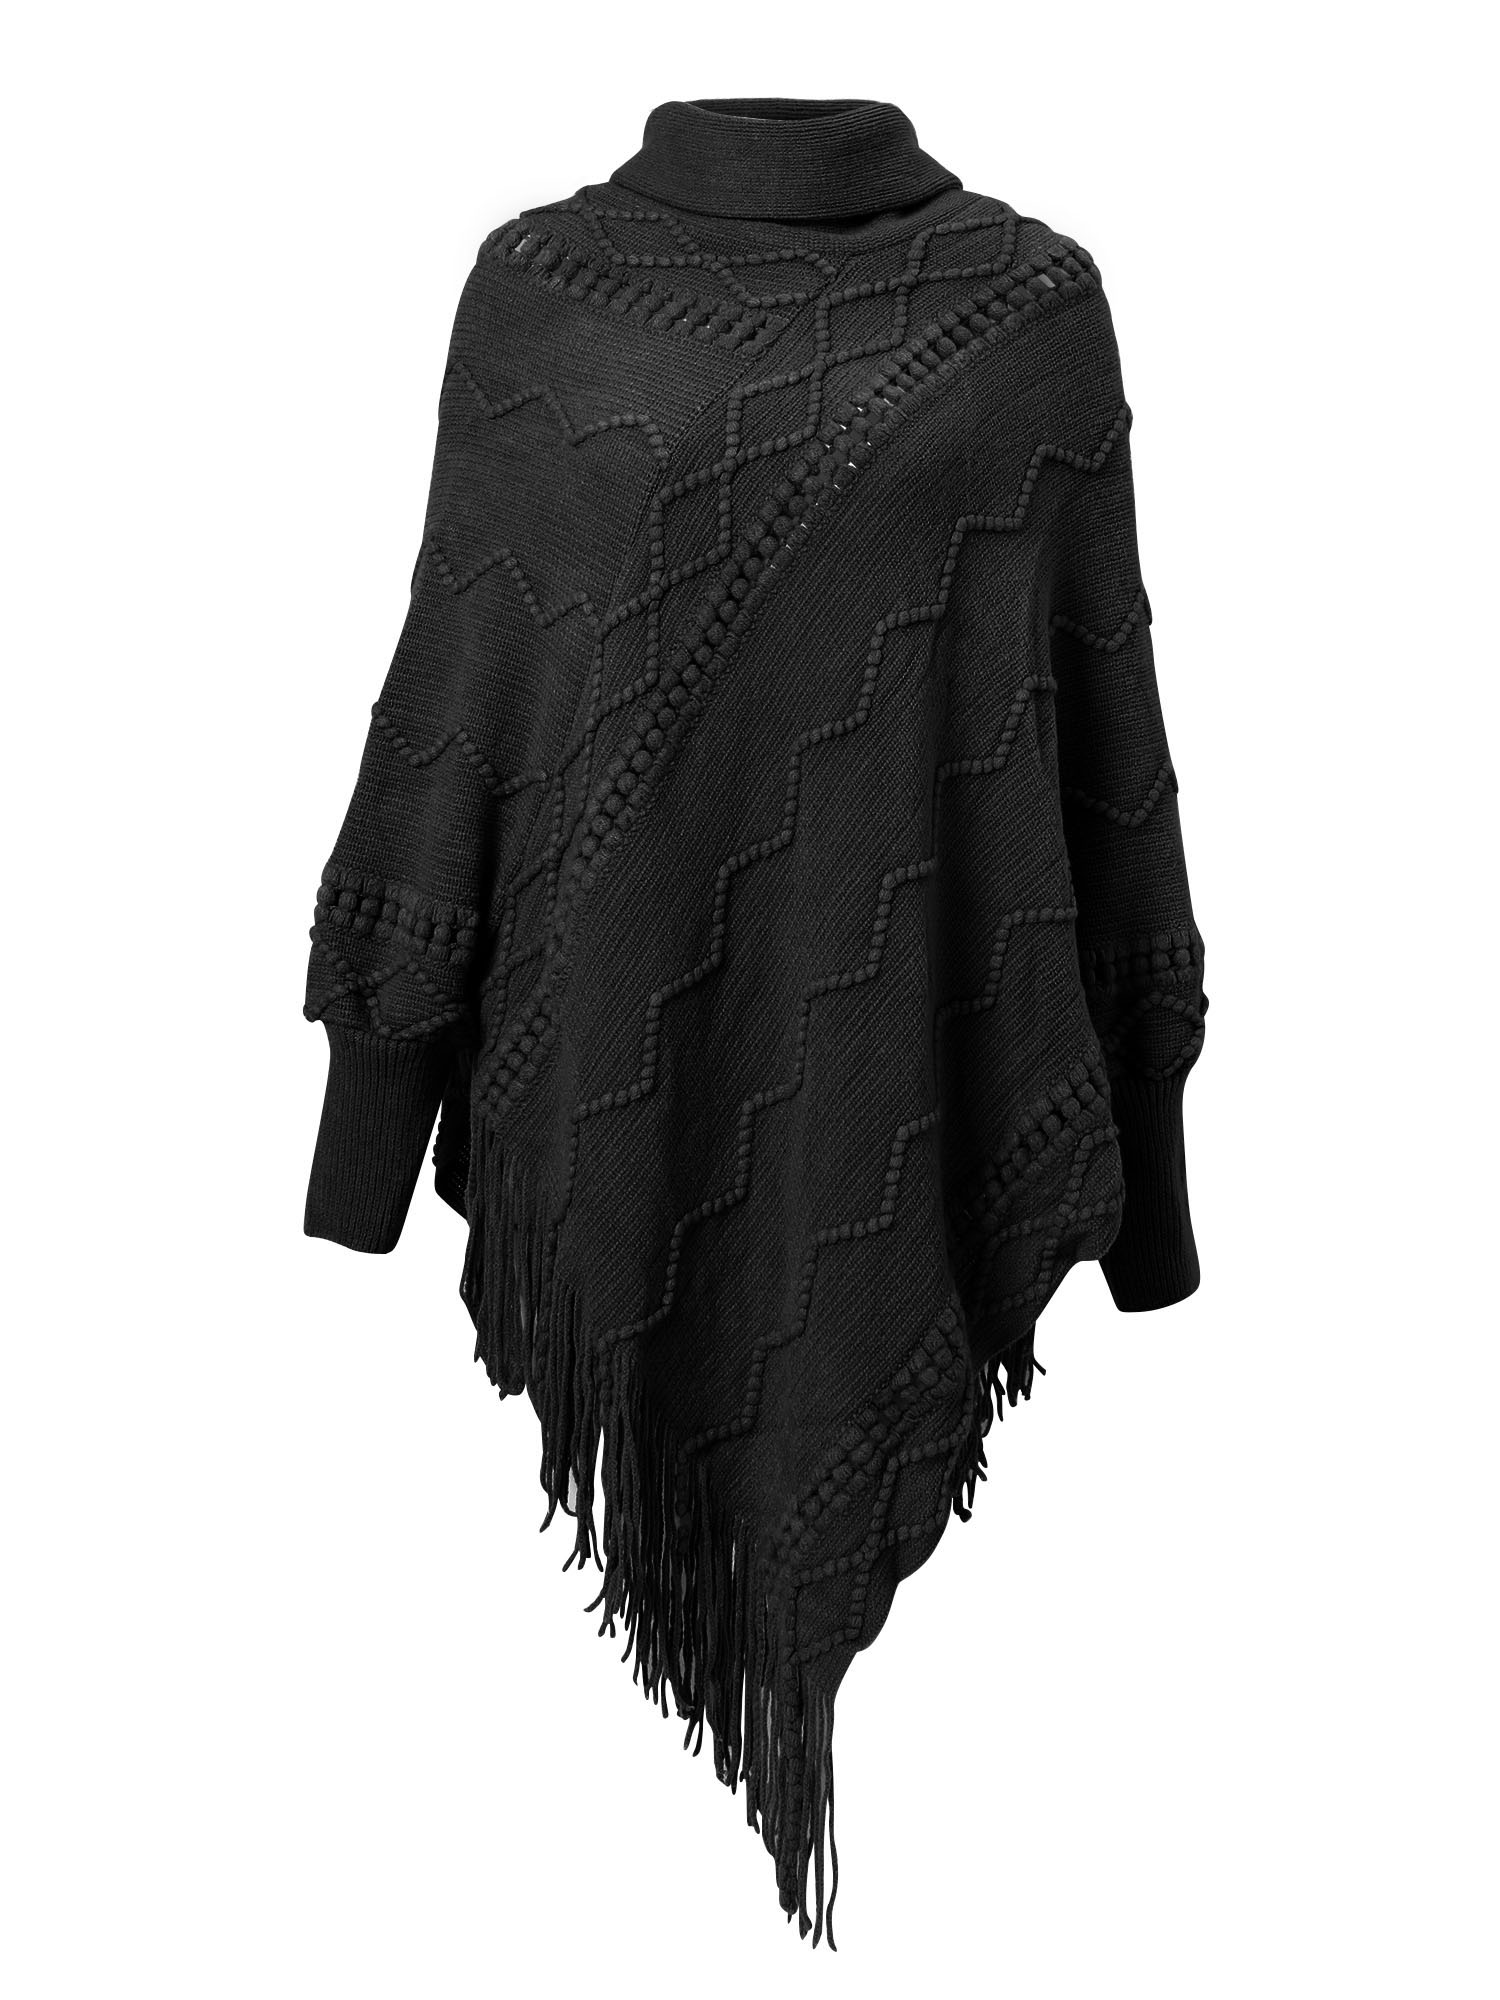 LELINTA Womens Knit Tassel Poncho Cardigan Fringed Pullover Cozy Sweater Wrap Jacket - image 2 of 4